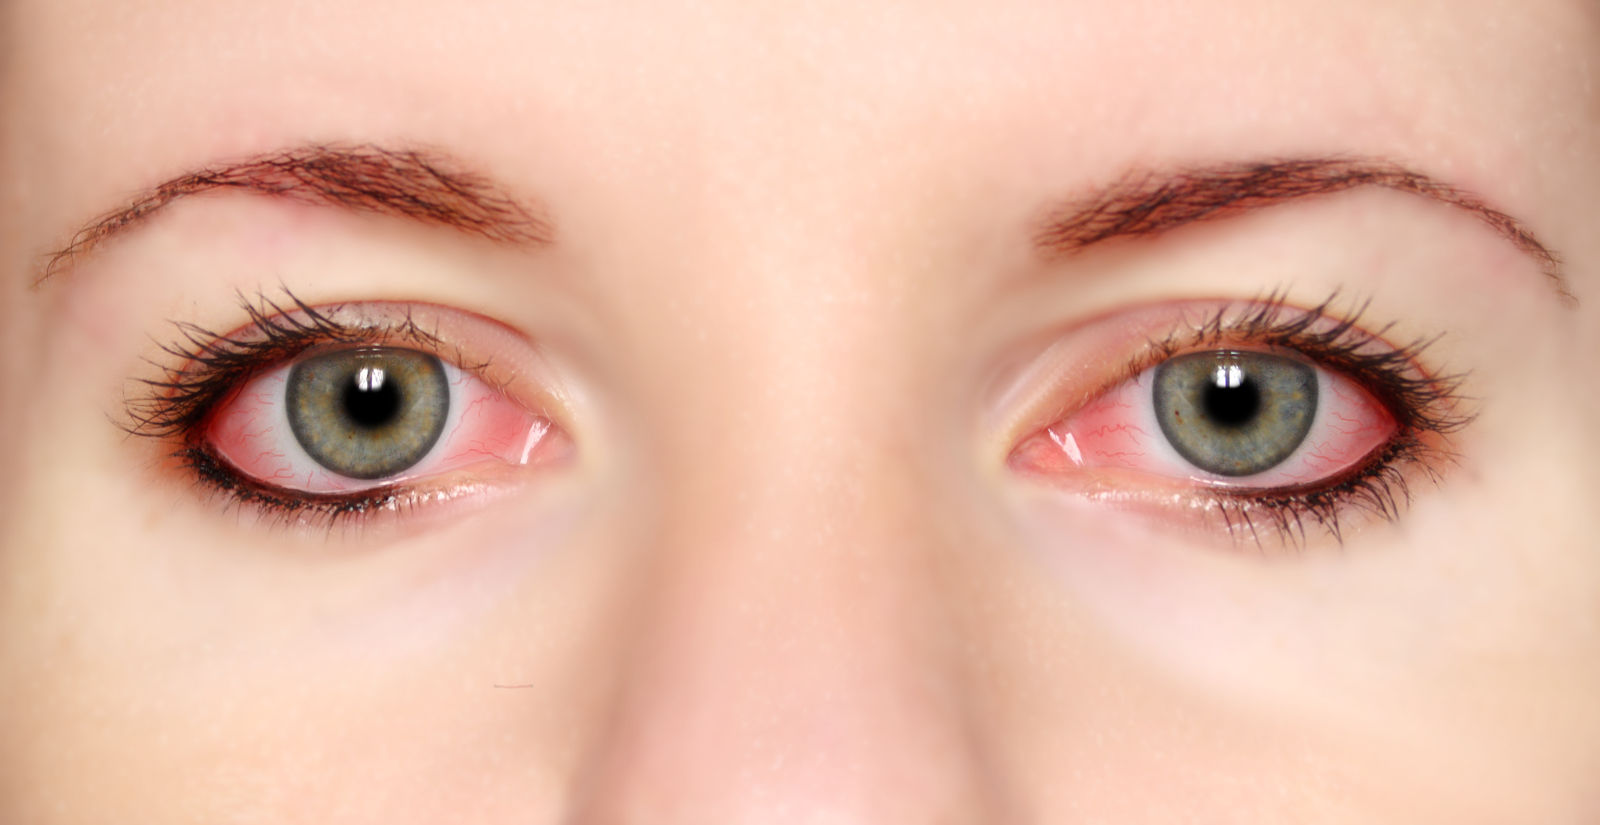 conjuntivitis-sintomas-causas-prevencion-tratamiento-oftalmolima